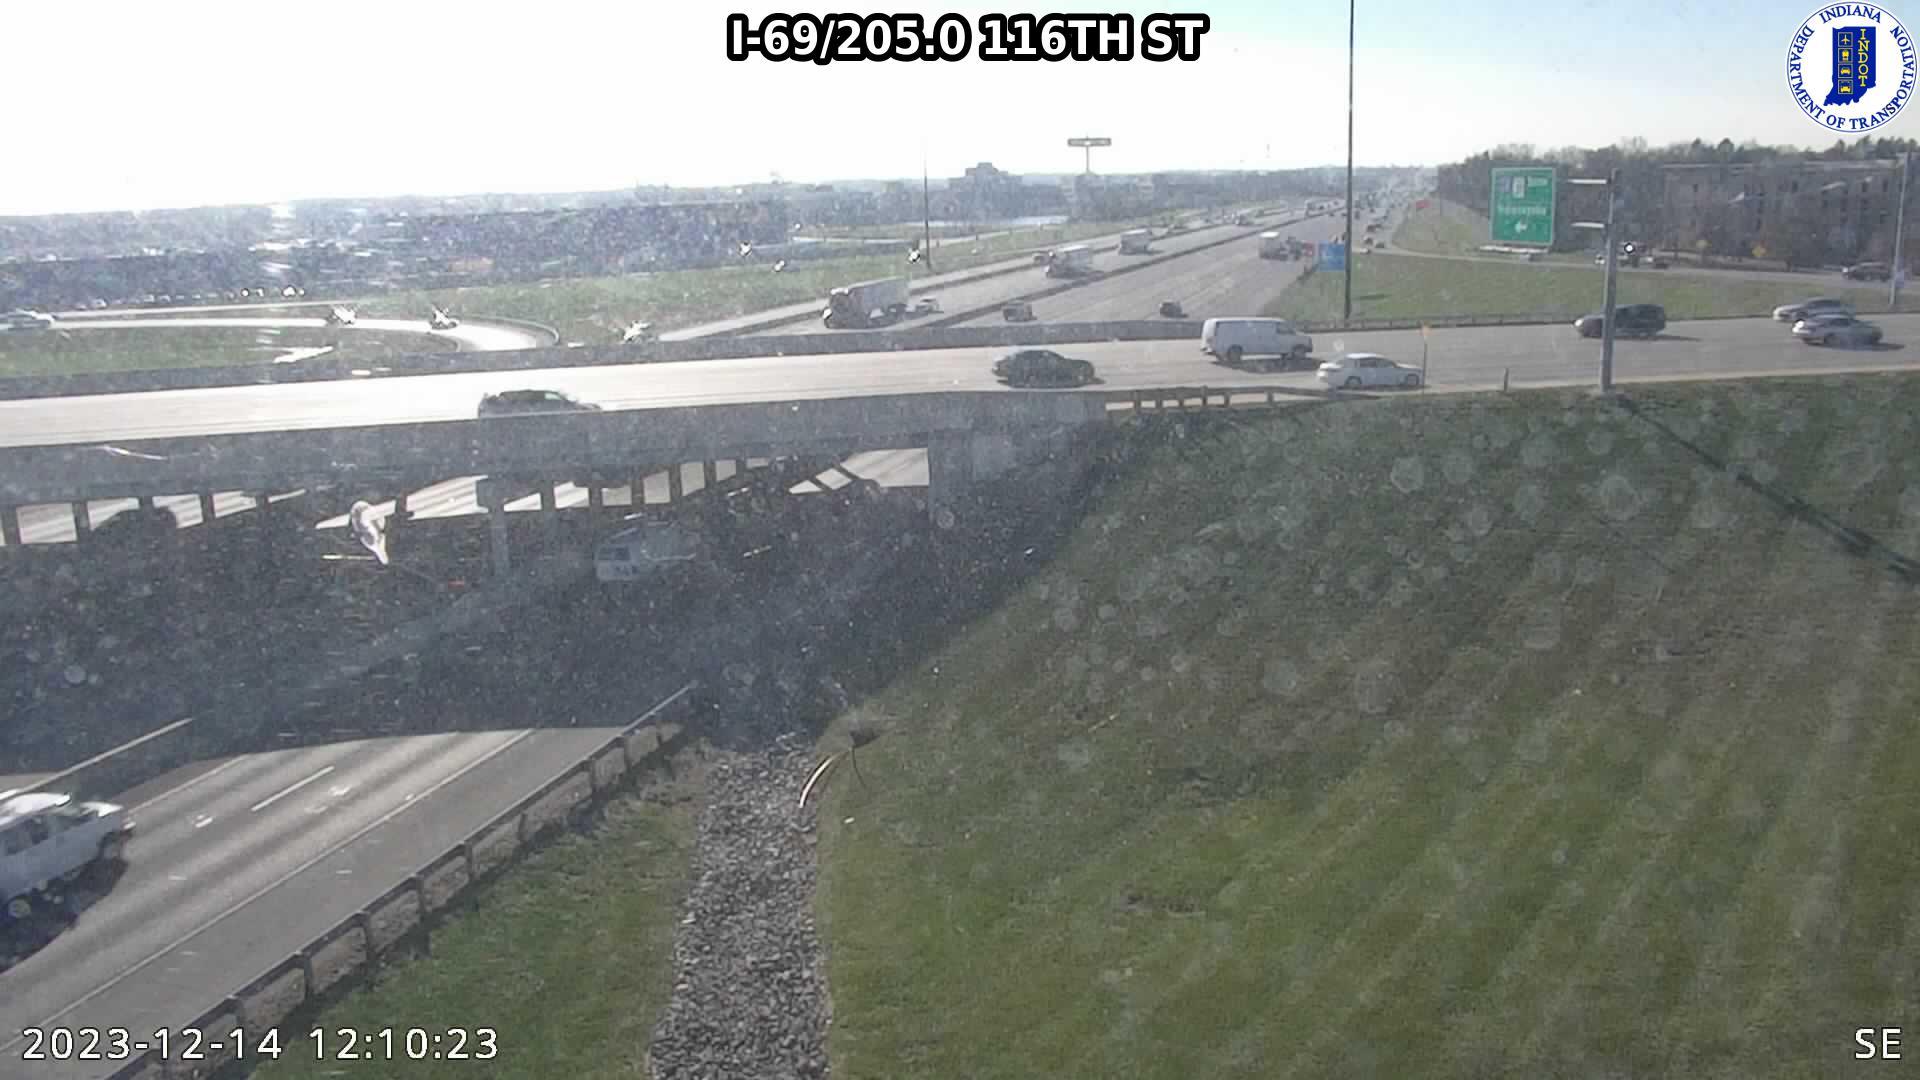 Traffic Cam Fishers: I-69: I-69/205.0 116TH ST Player